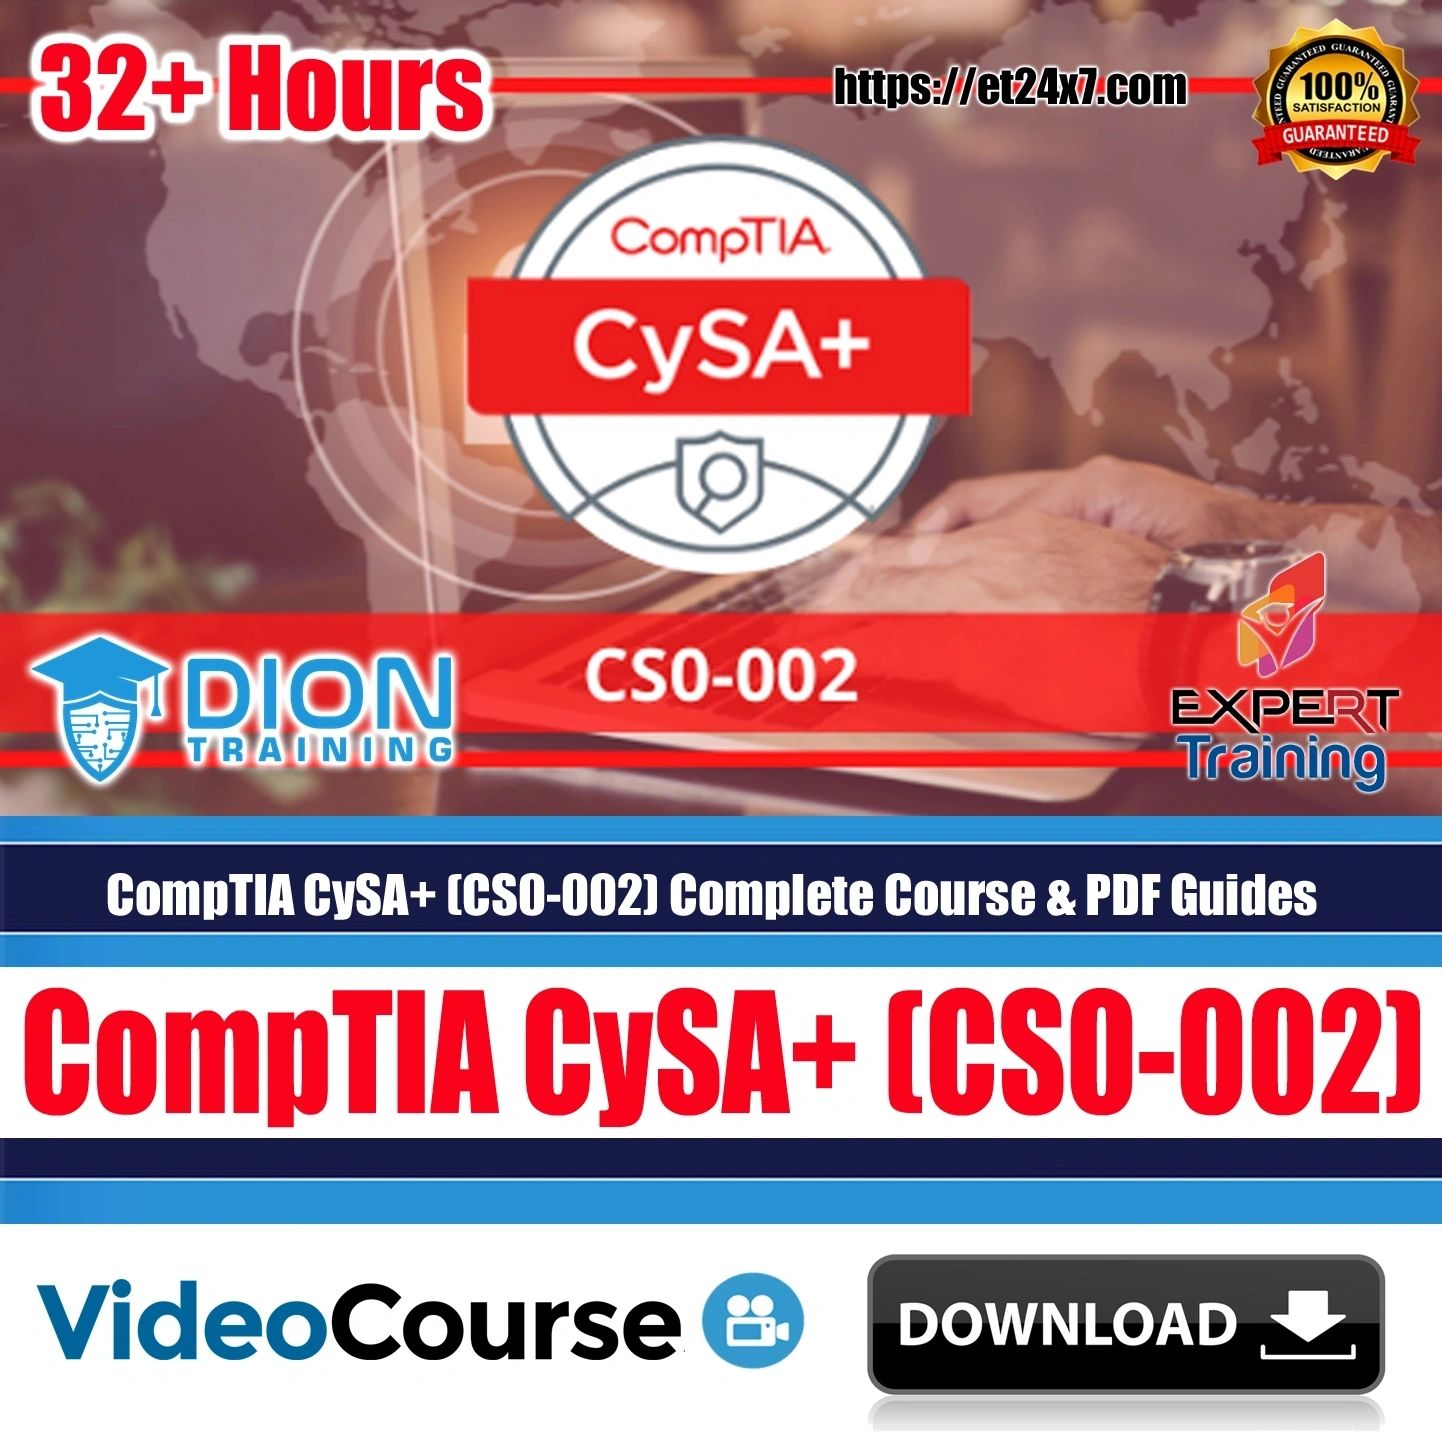 CompTIA CySA+ (CS0-002) Complete Course & PDF Guides